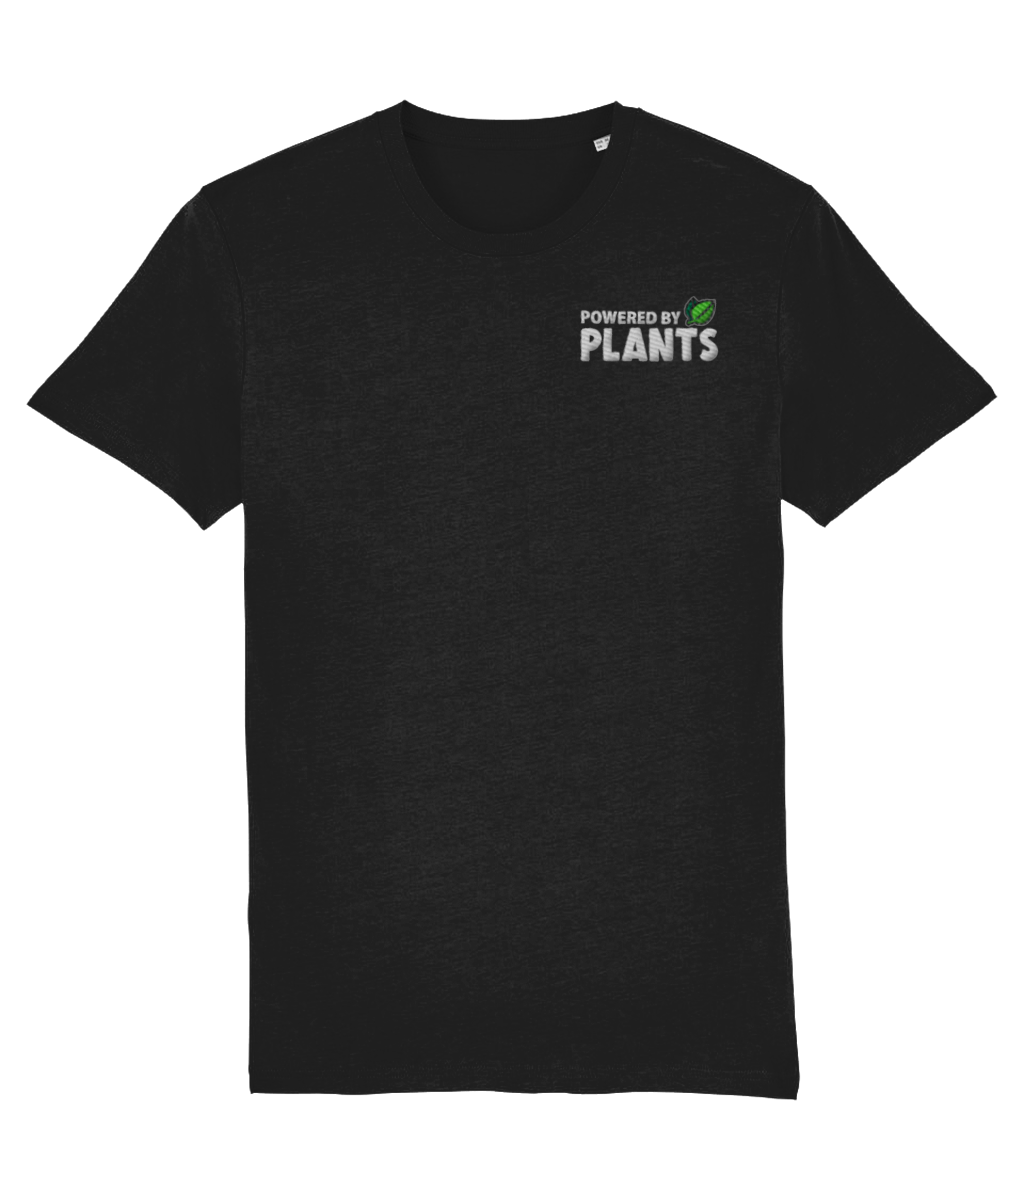 Black powered by plants shirt